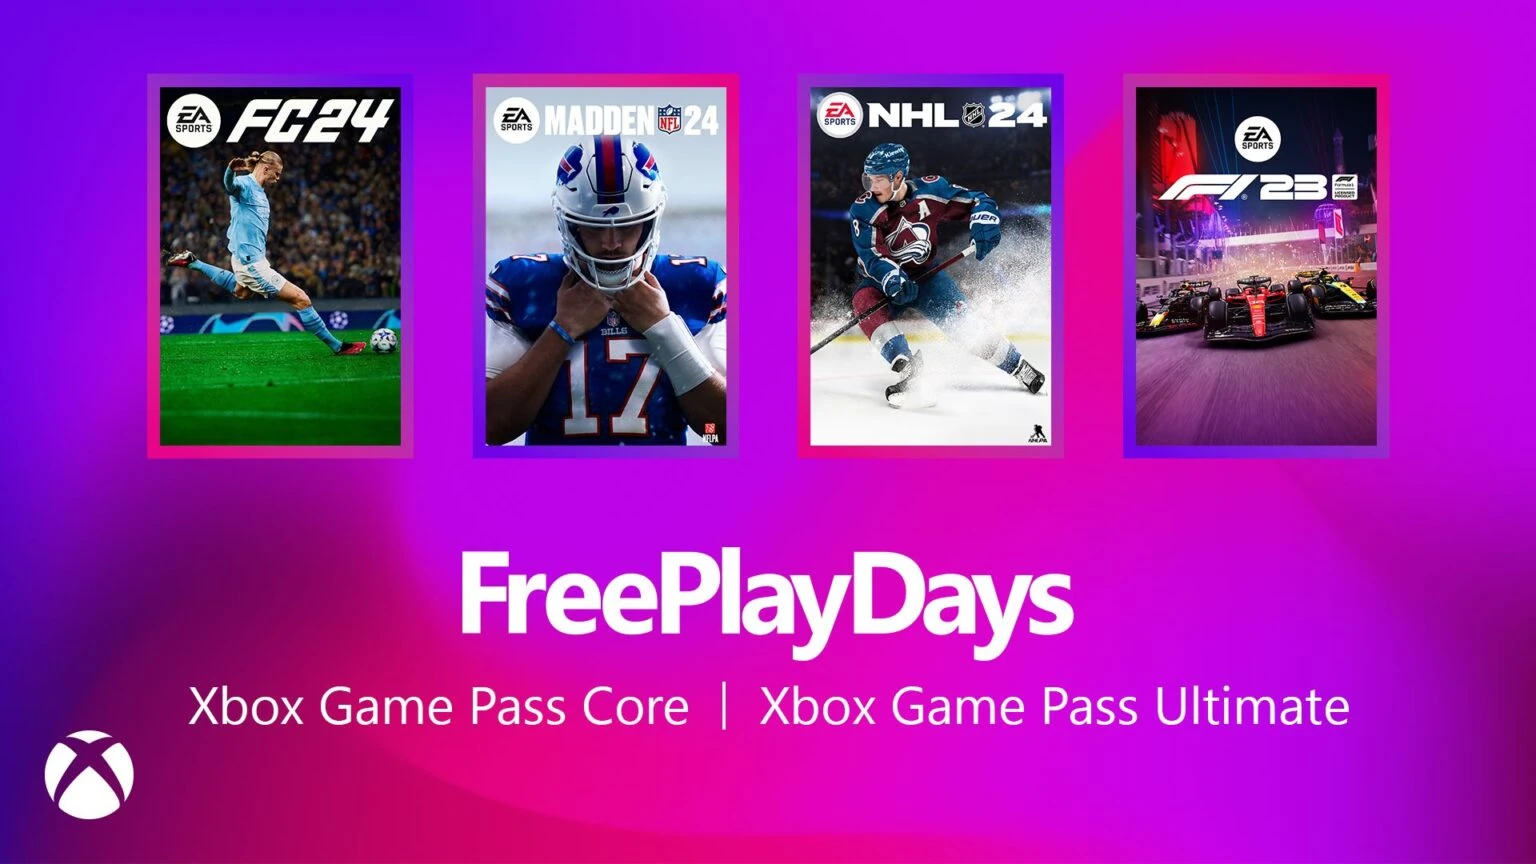 Juegos gratuitos para Xbox este fin de semana